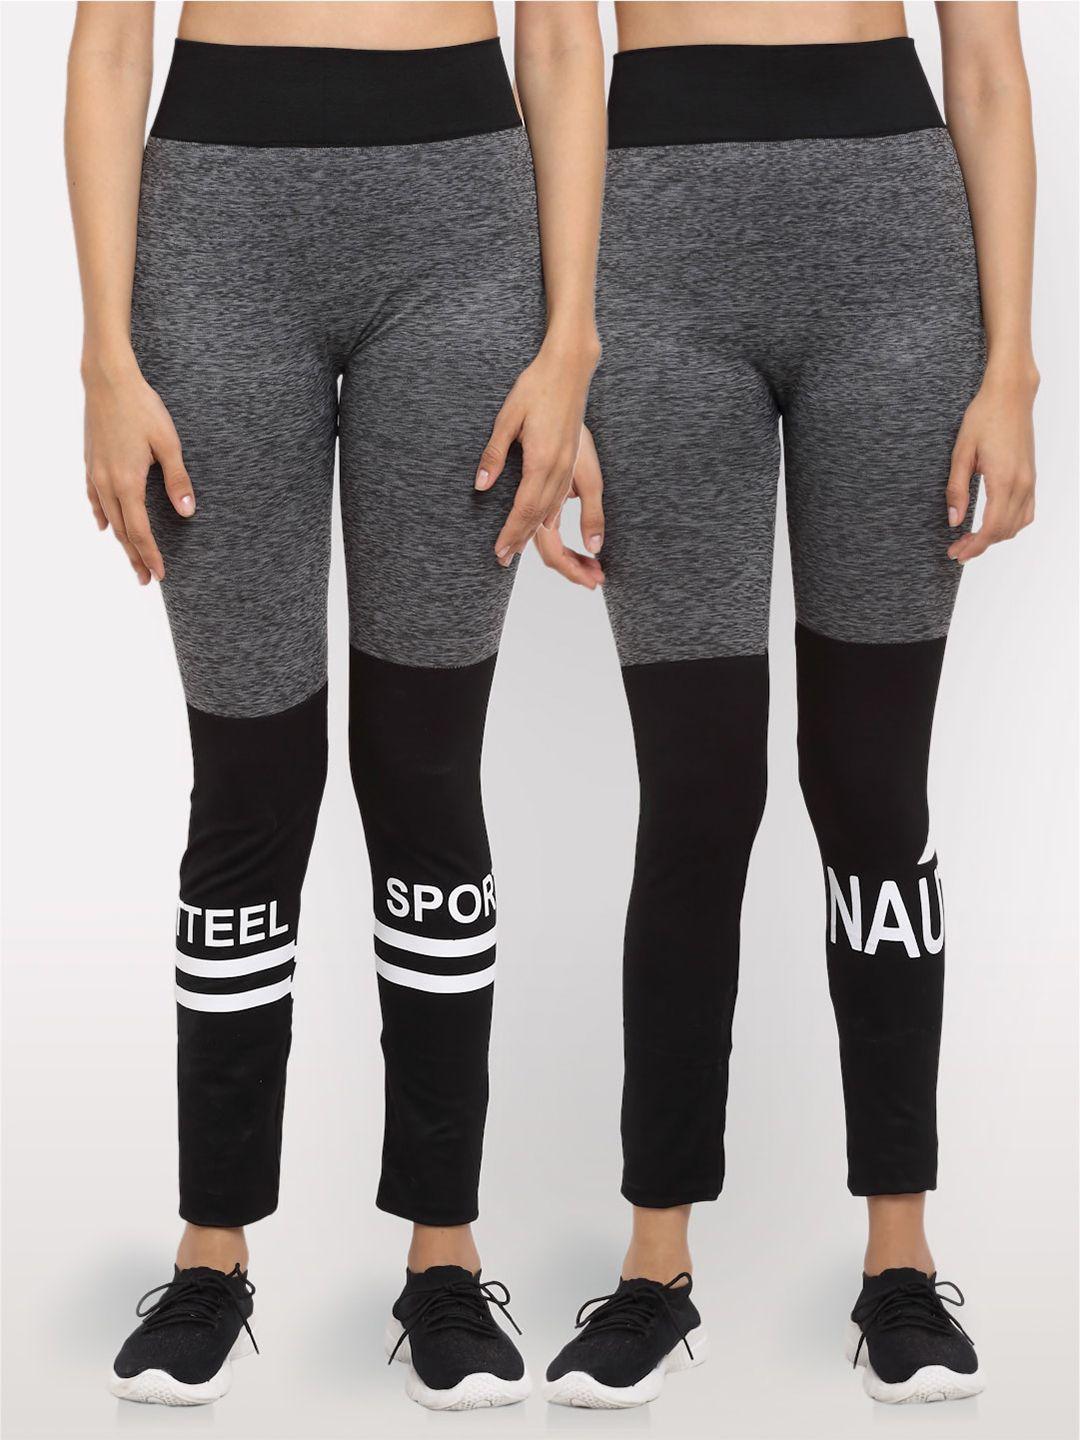 neudis women pack of 2 charcoal grey & black seamless yoga tights